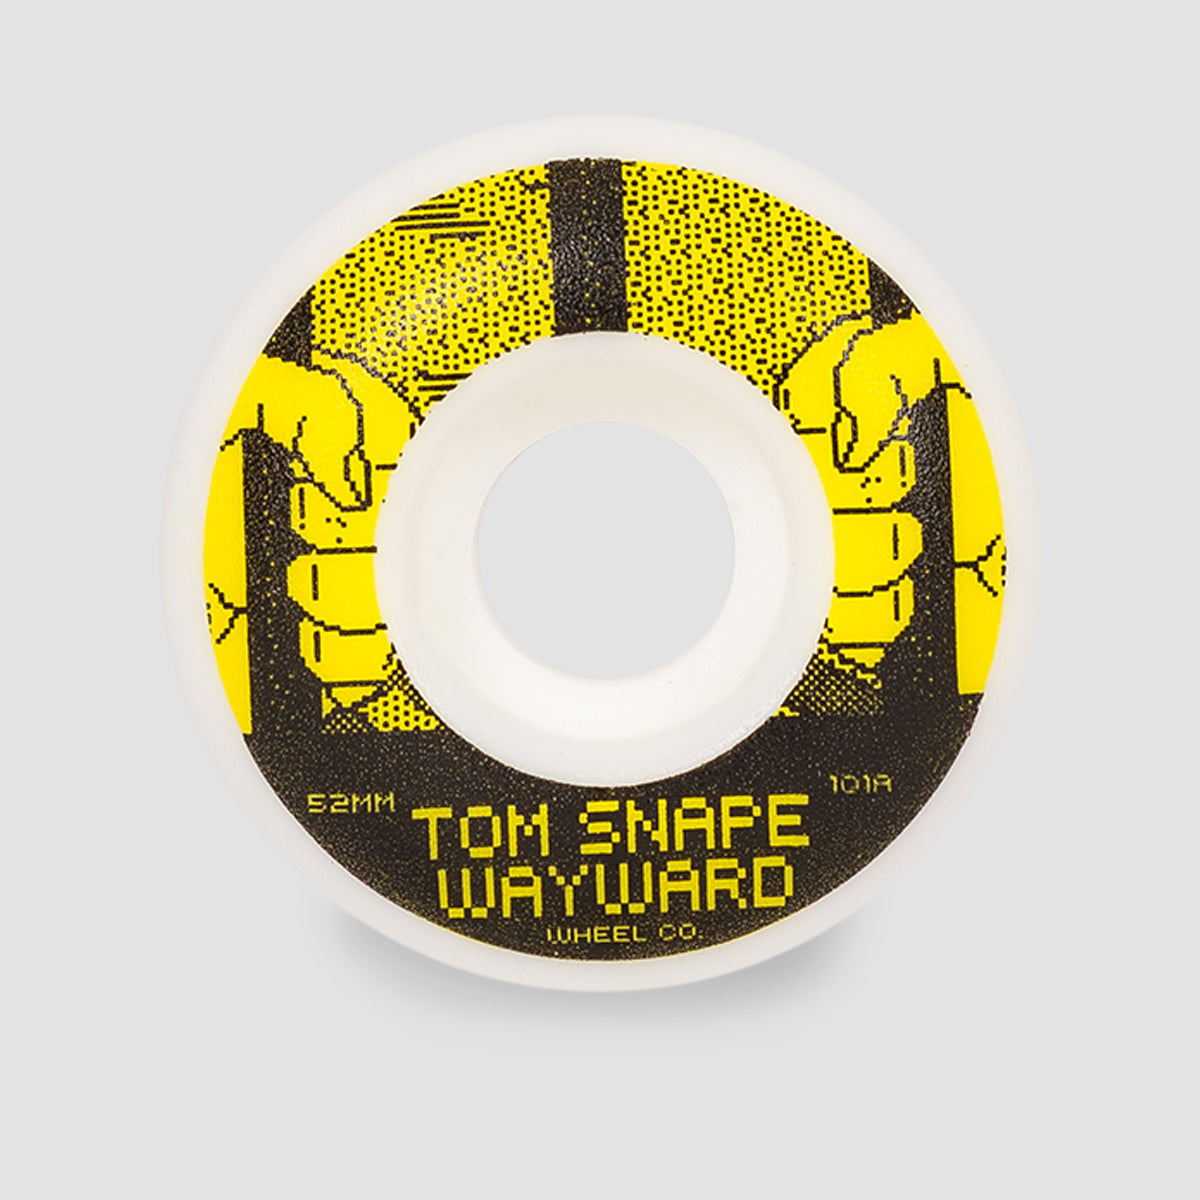 Wayward Tom Snape Classic Shape 101A Skateboard Wheels White/Yellow 52mm